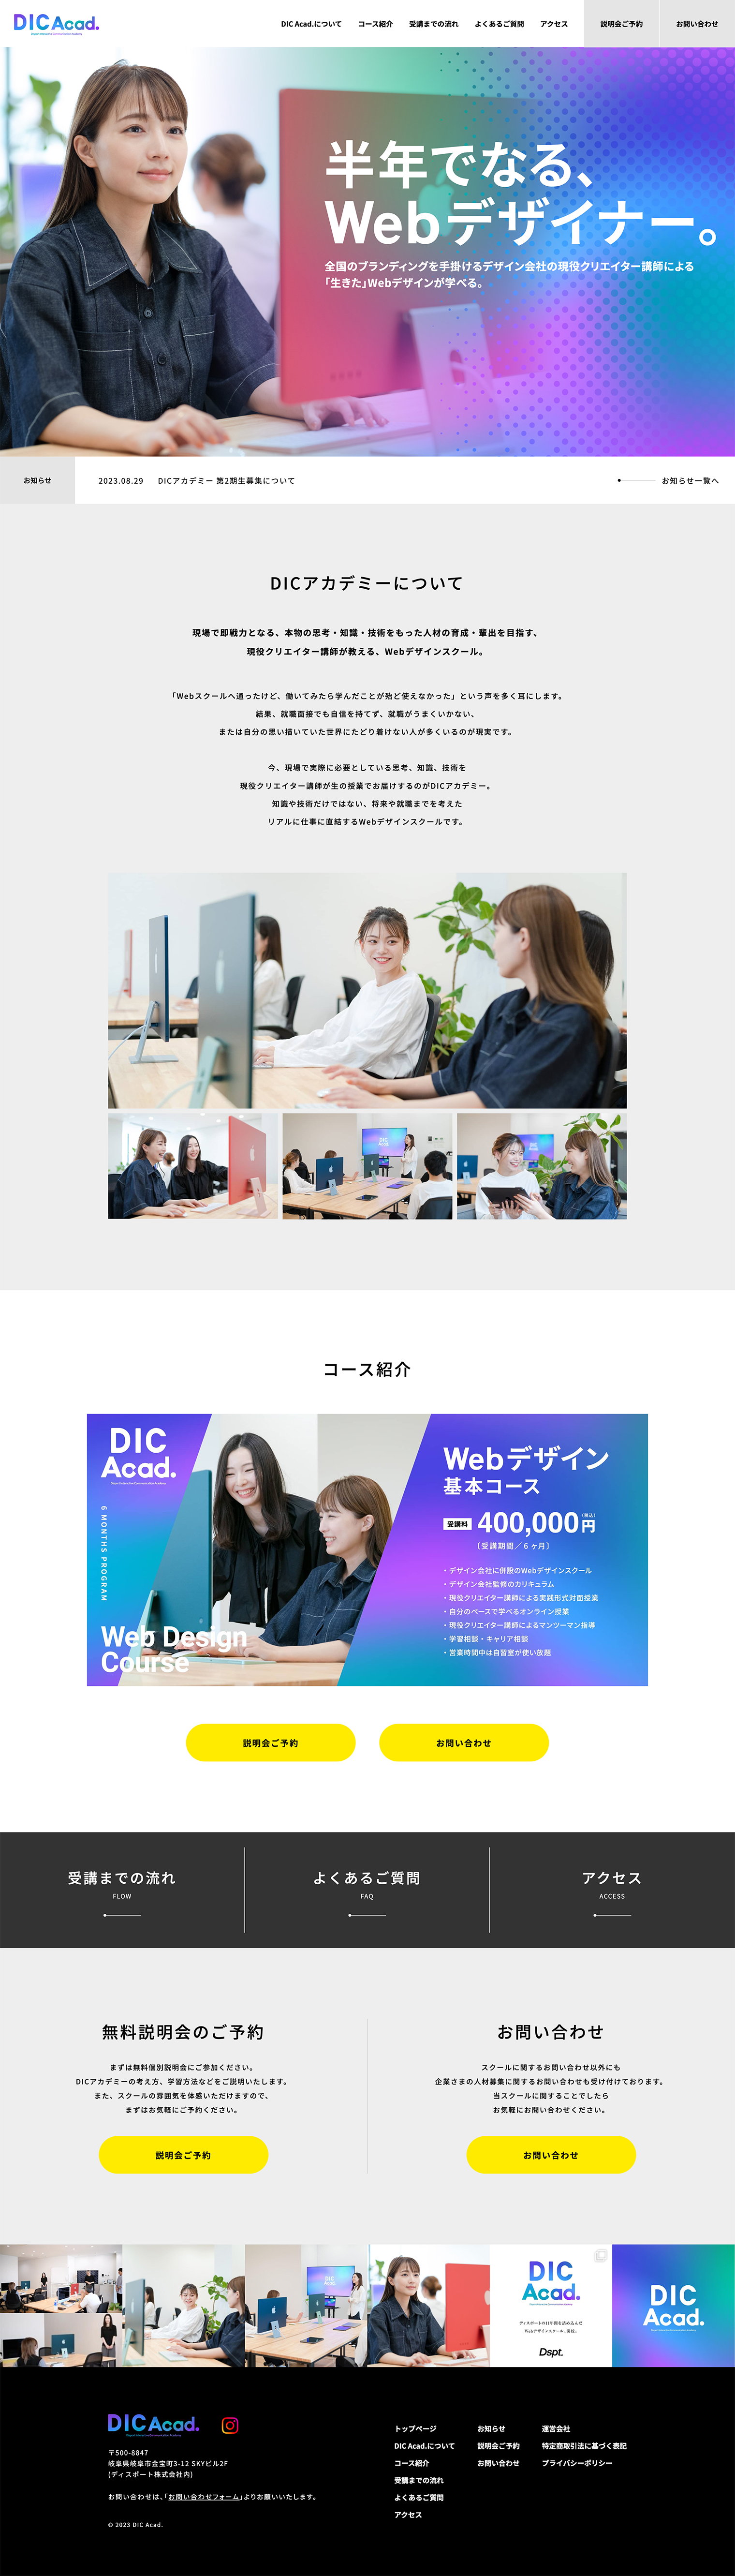 DIC Academy Webサイトデザイン・構築